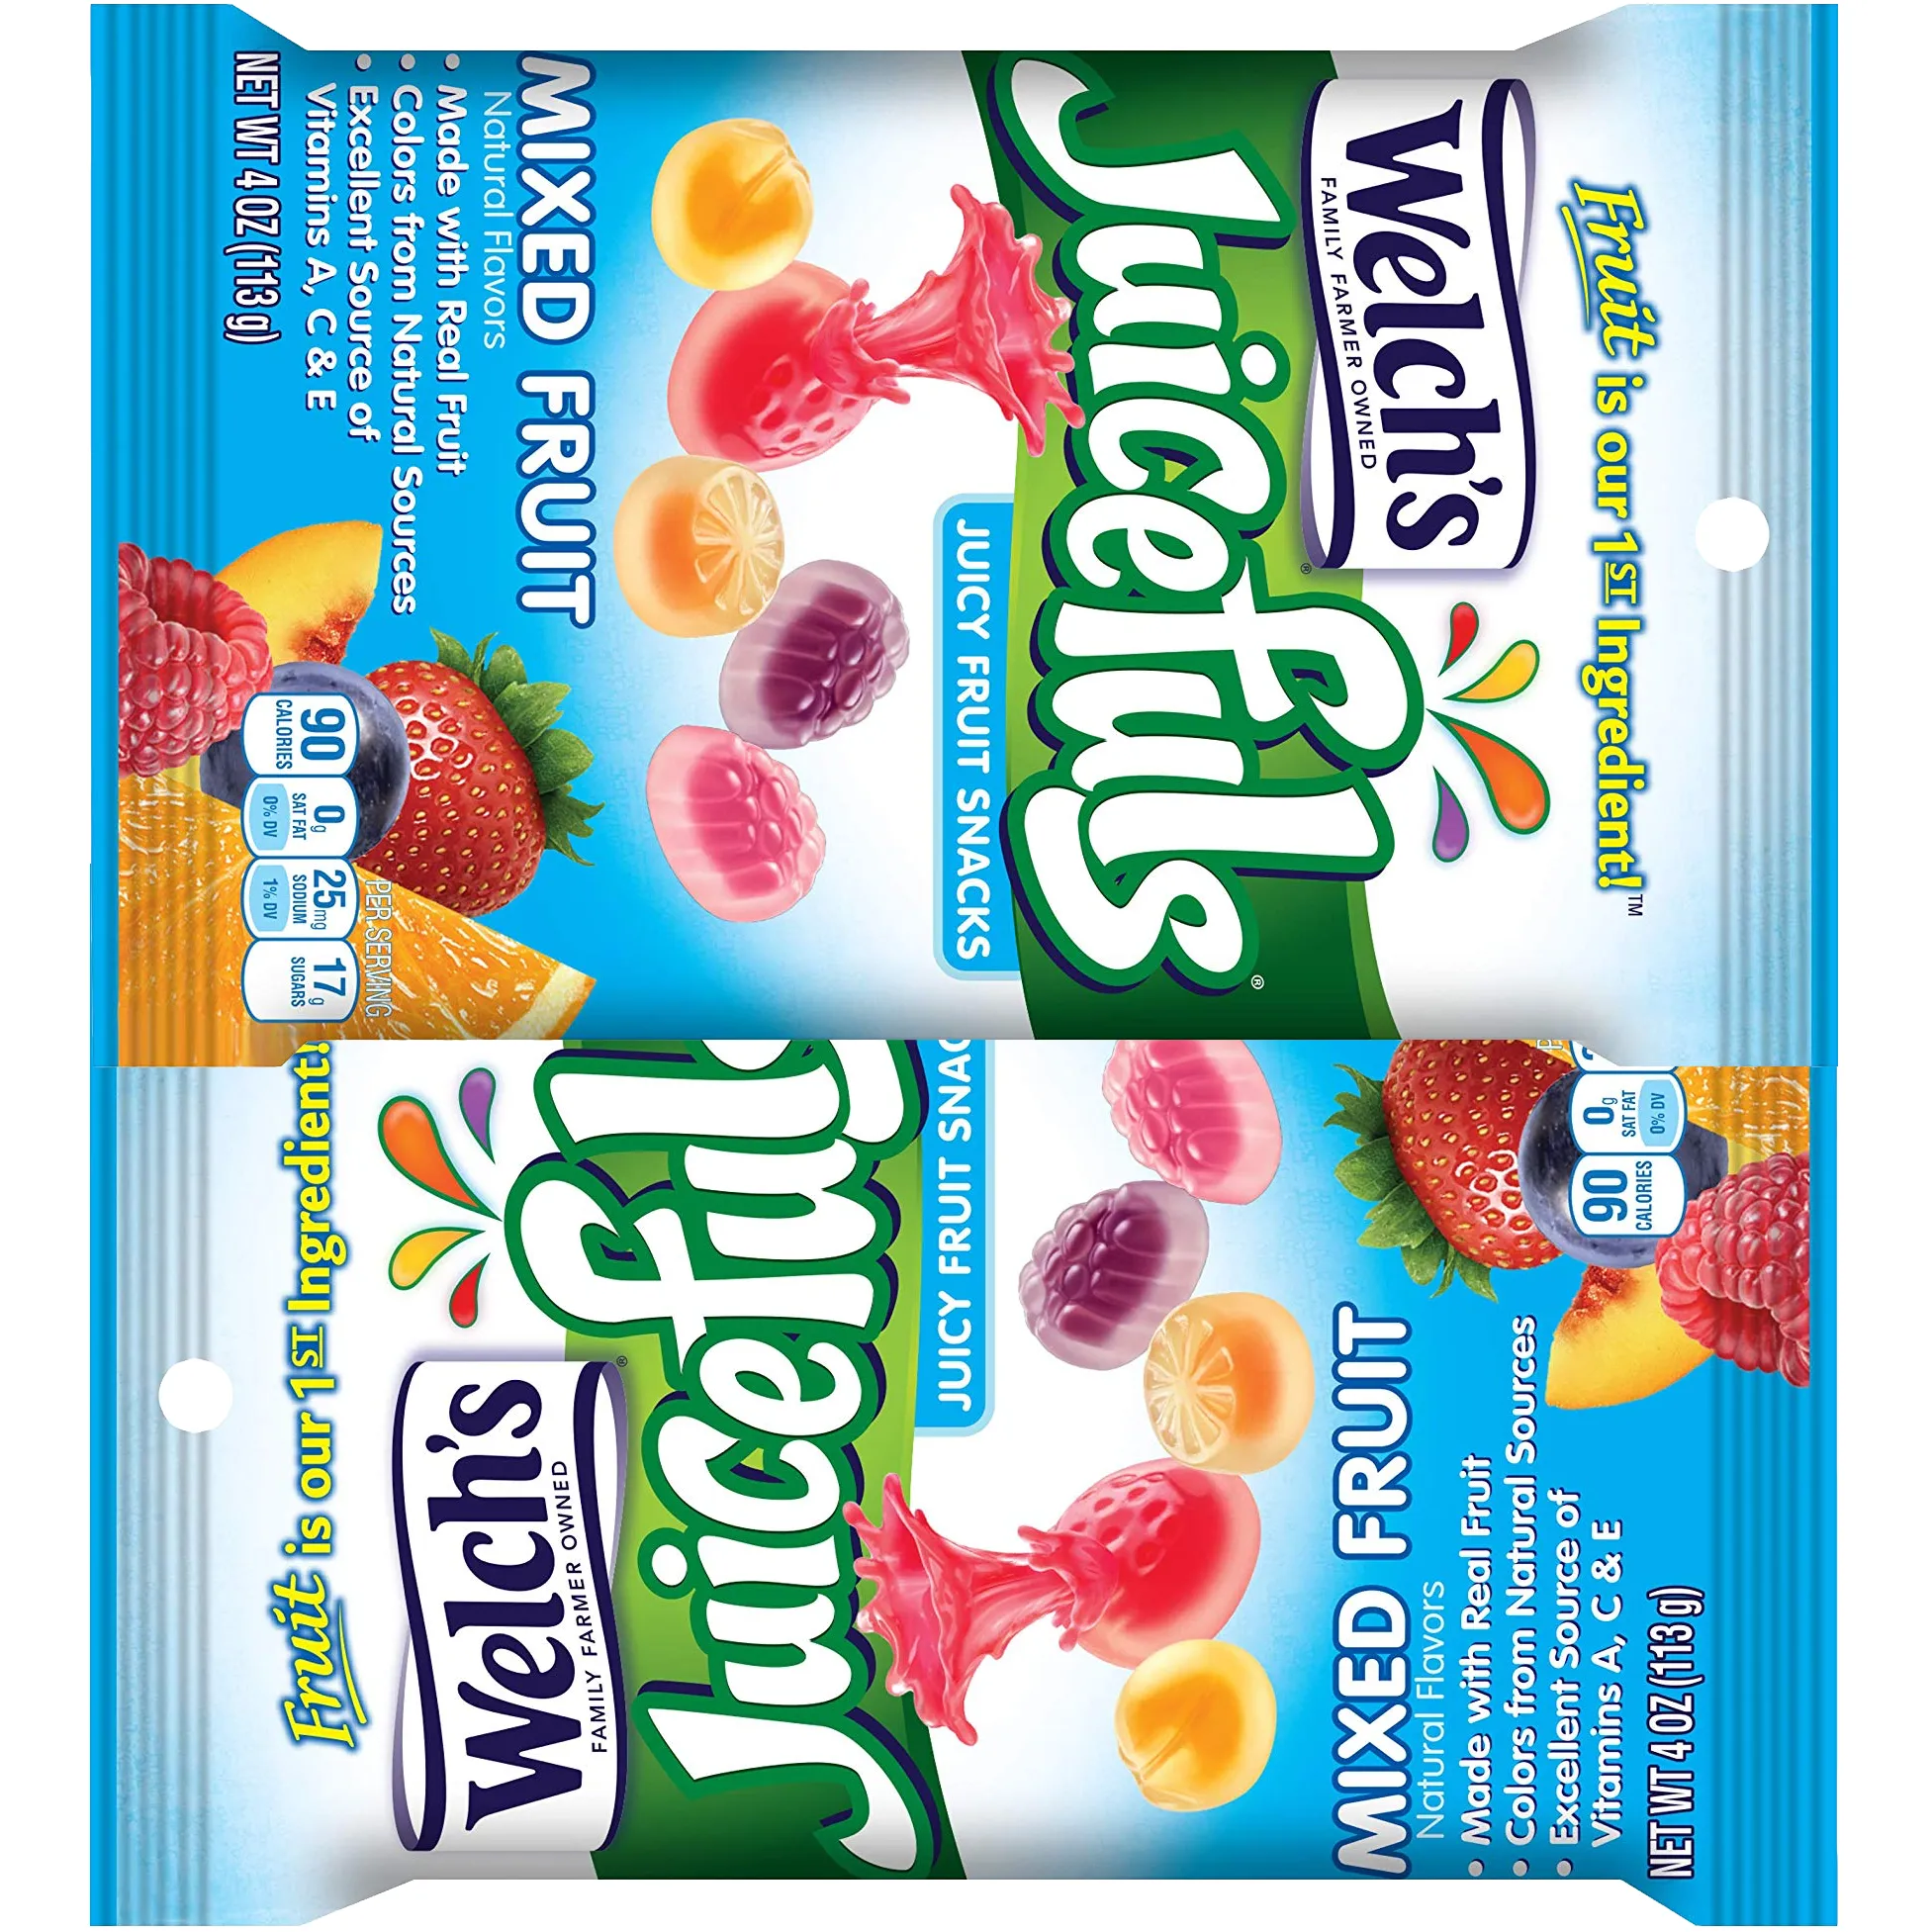 Free Welch's Juicefuls Fruit Snacks